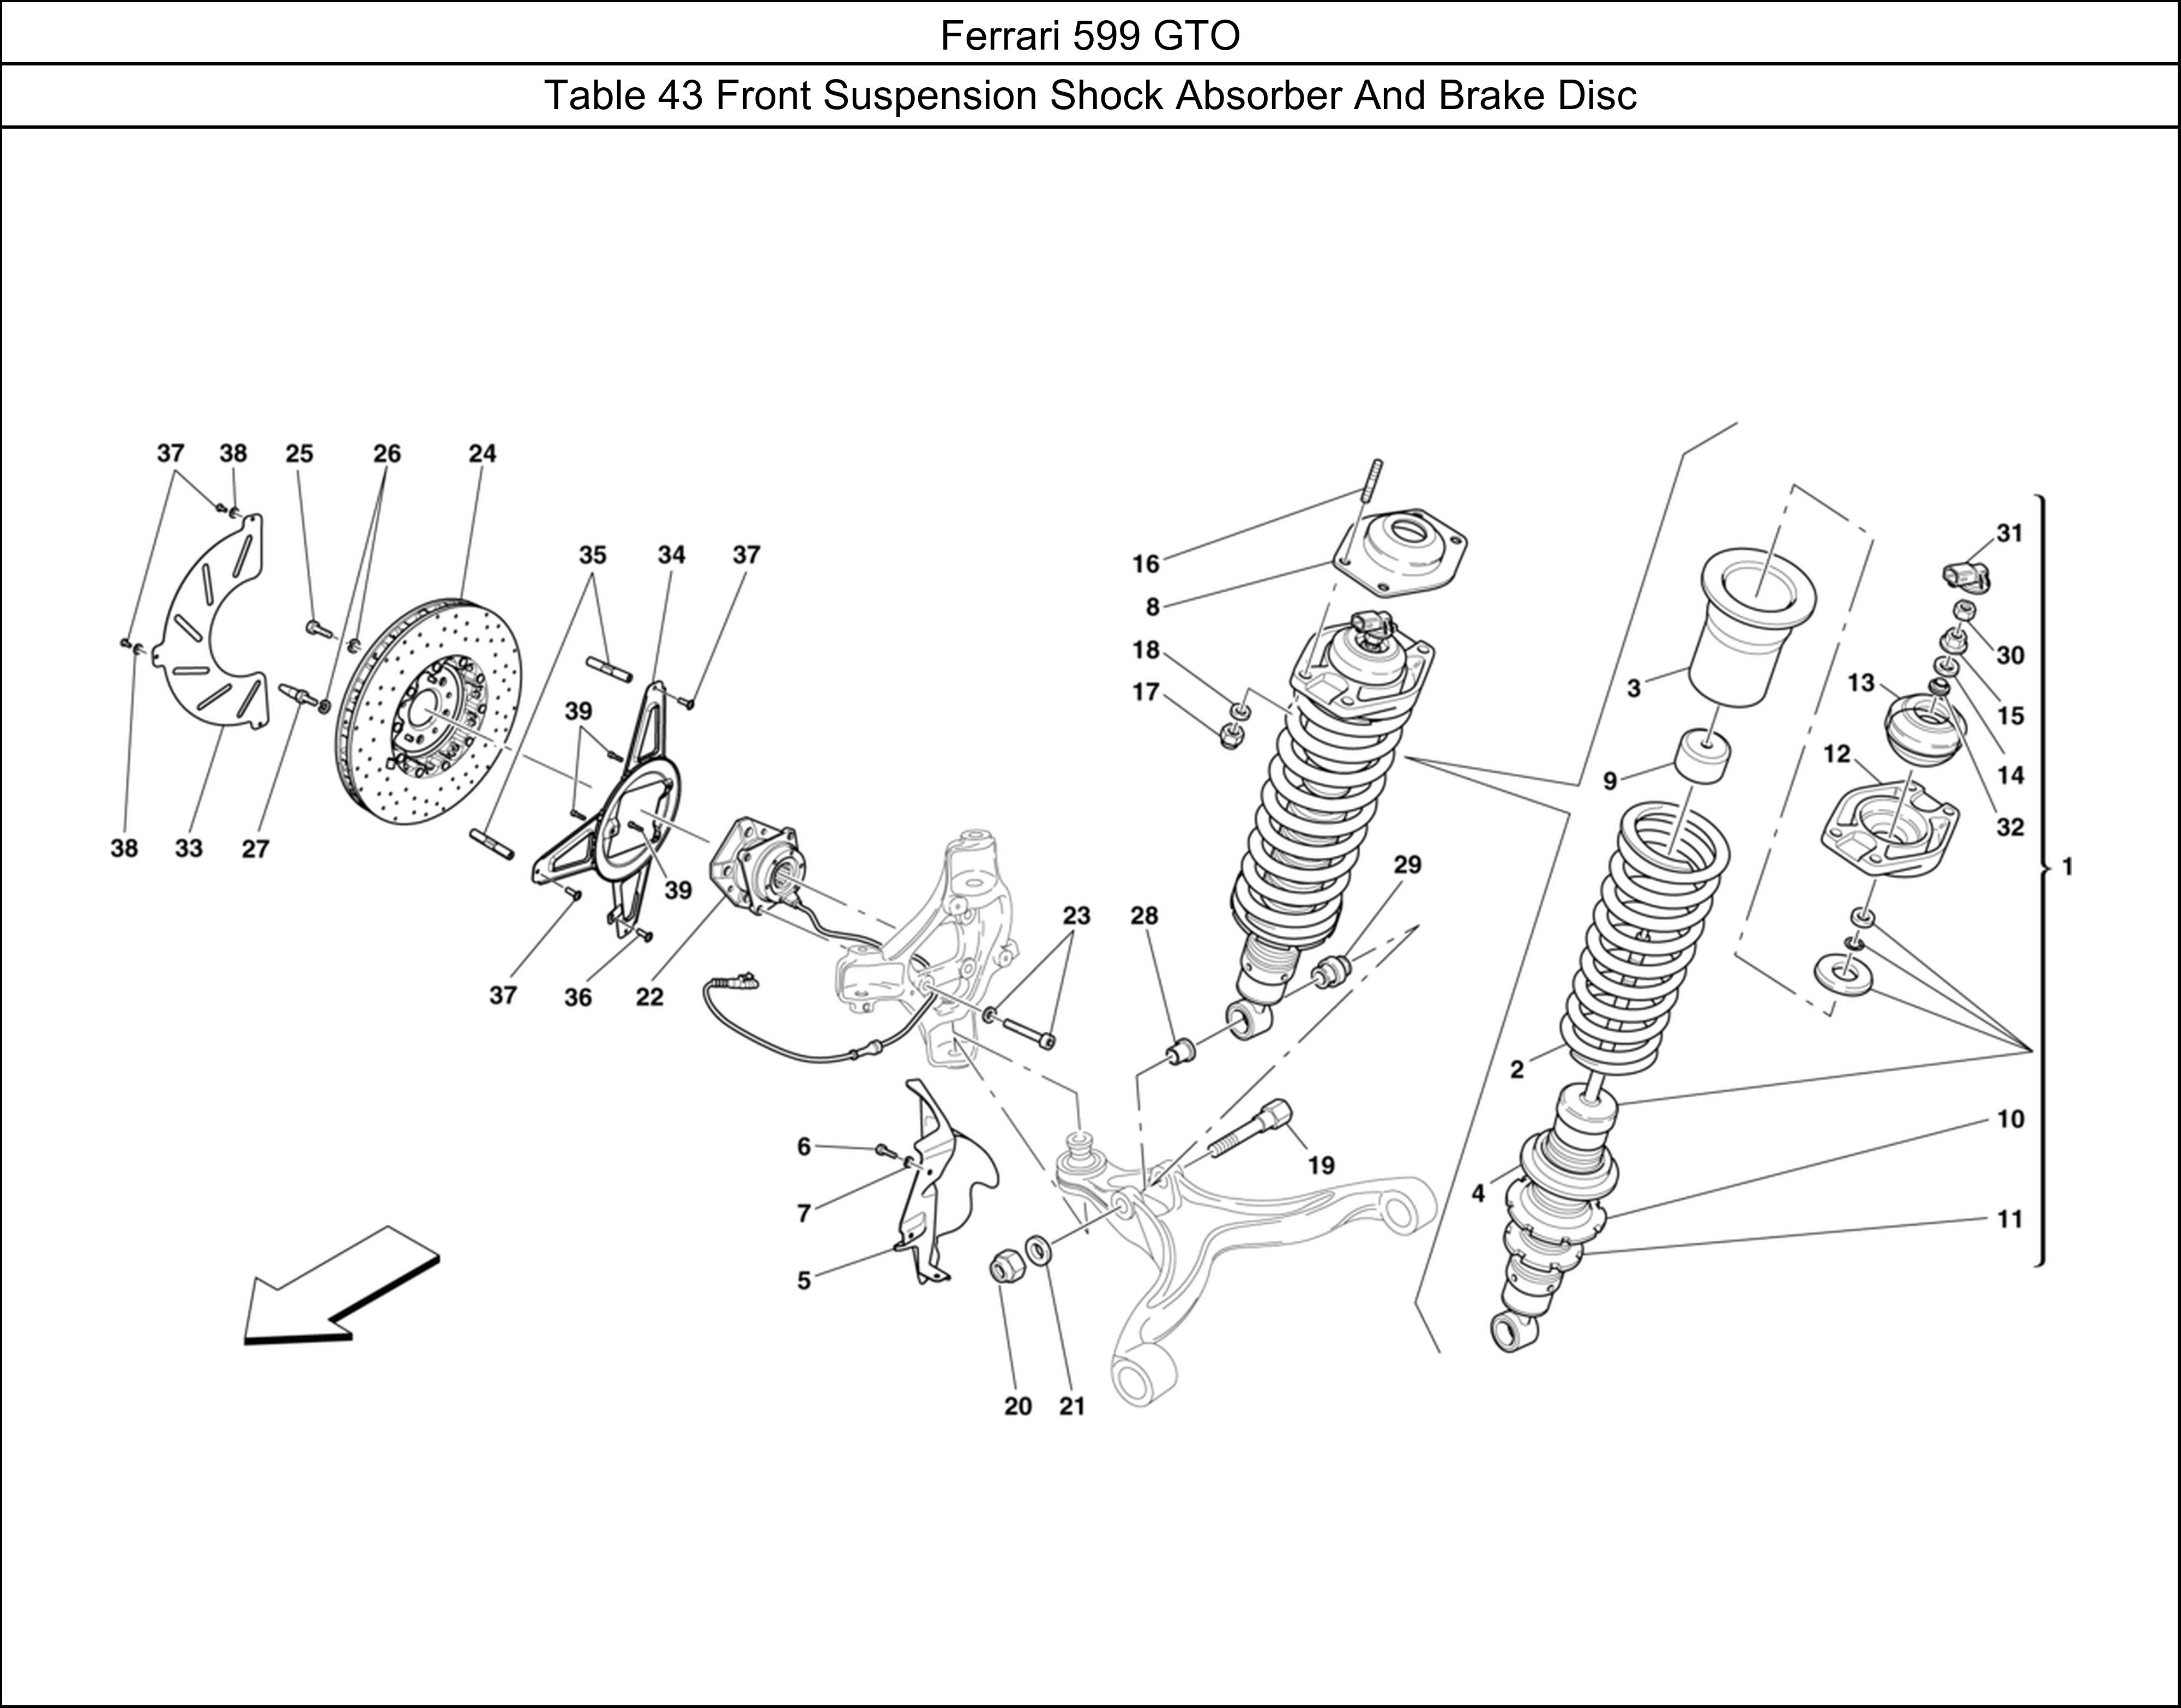 Ferrari Parts Ferrari 599 GTO Table 43 Front Suspension Shock Absorber And Brake Disc